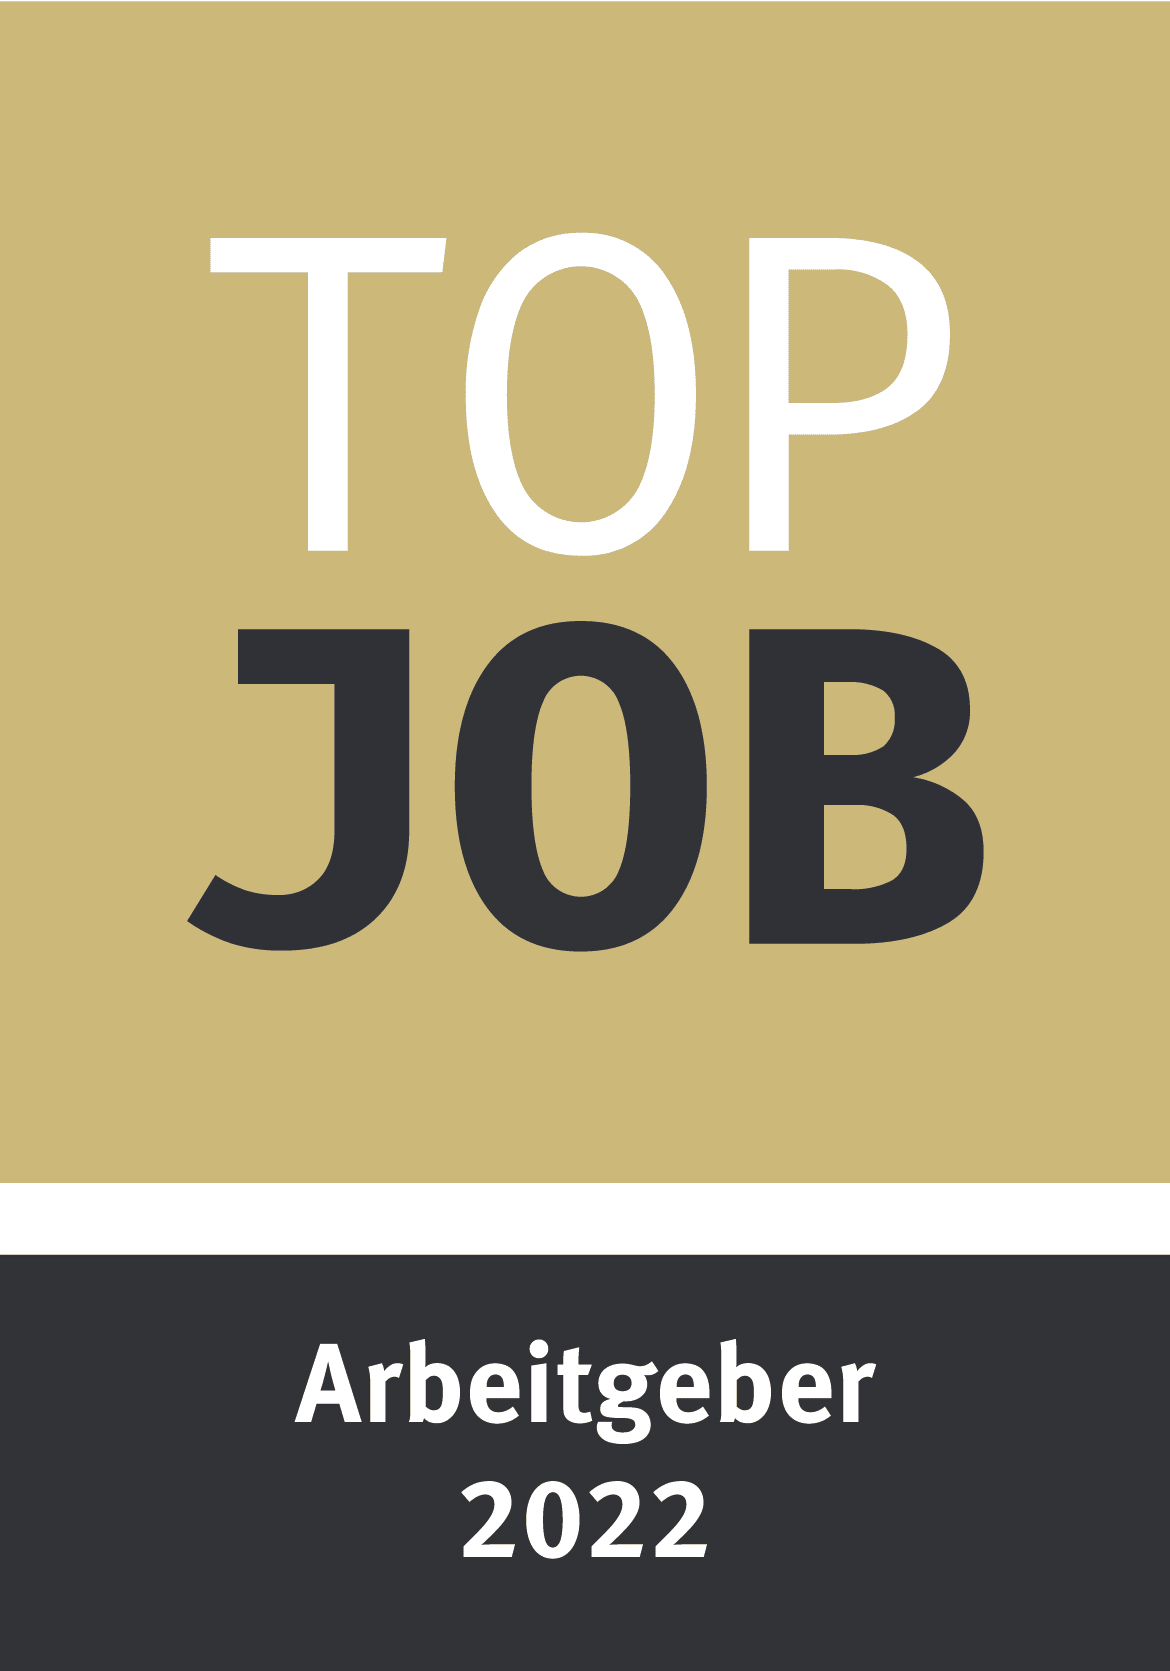 Top Job Arbeitgeber 2022